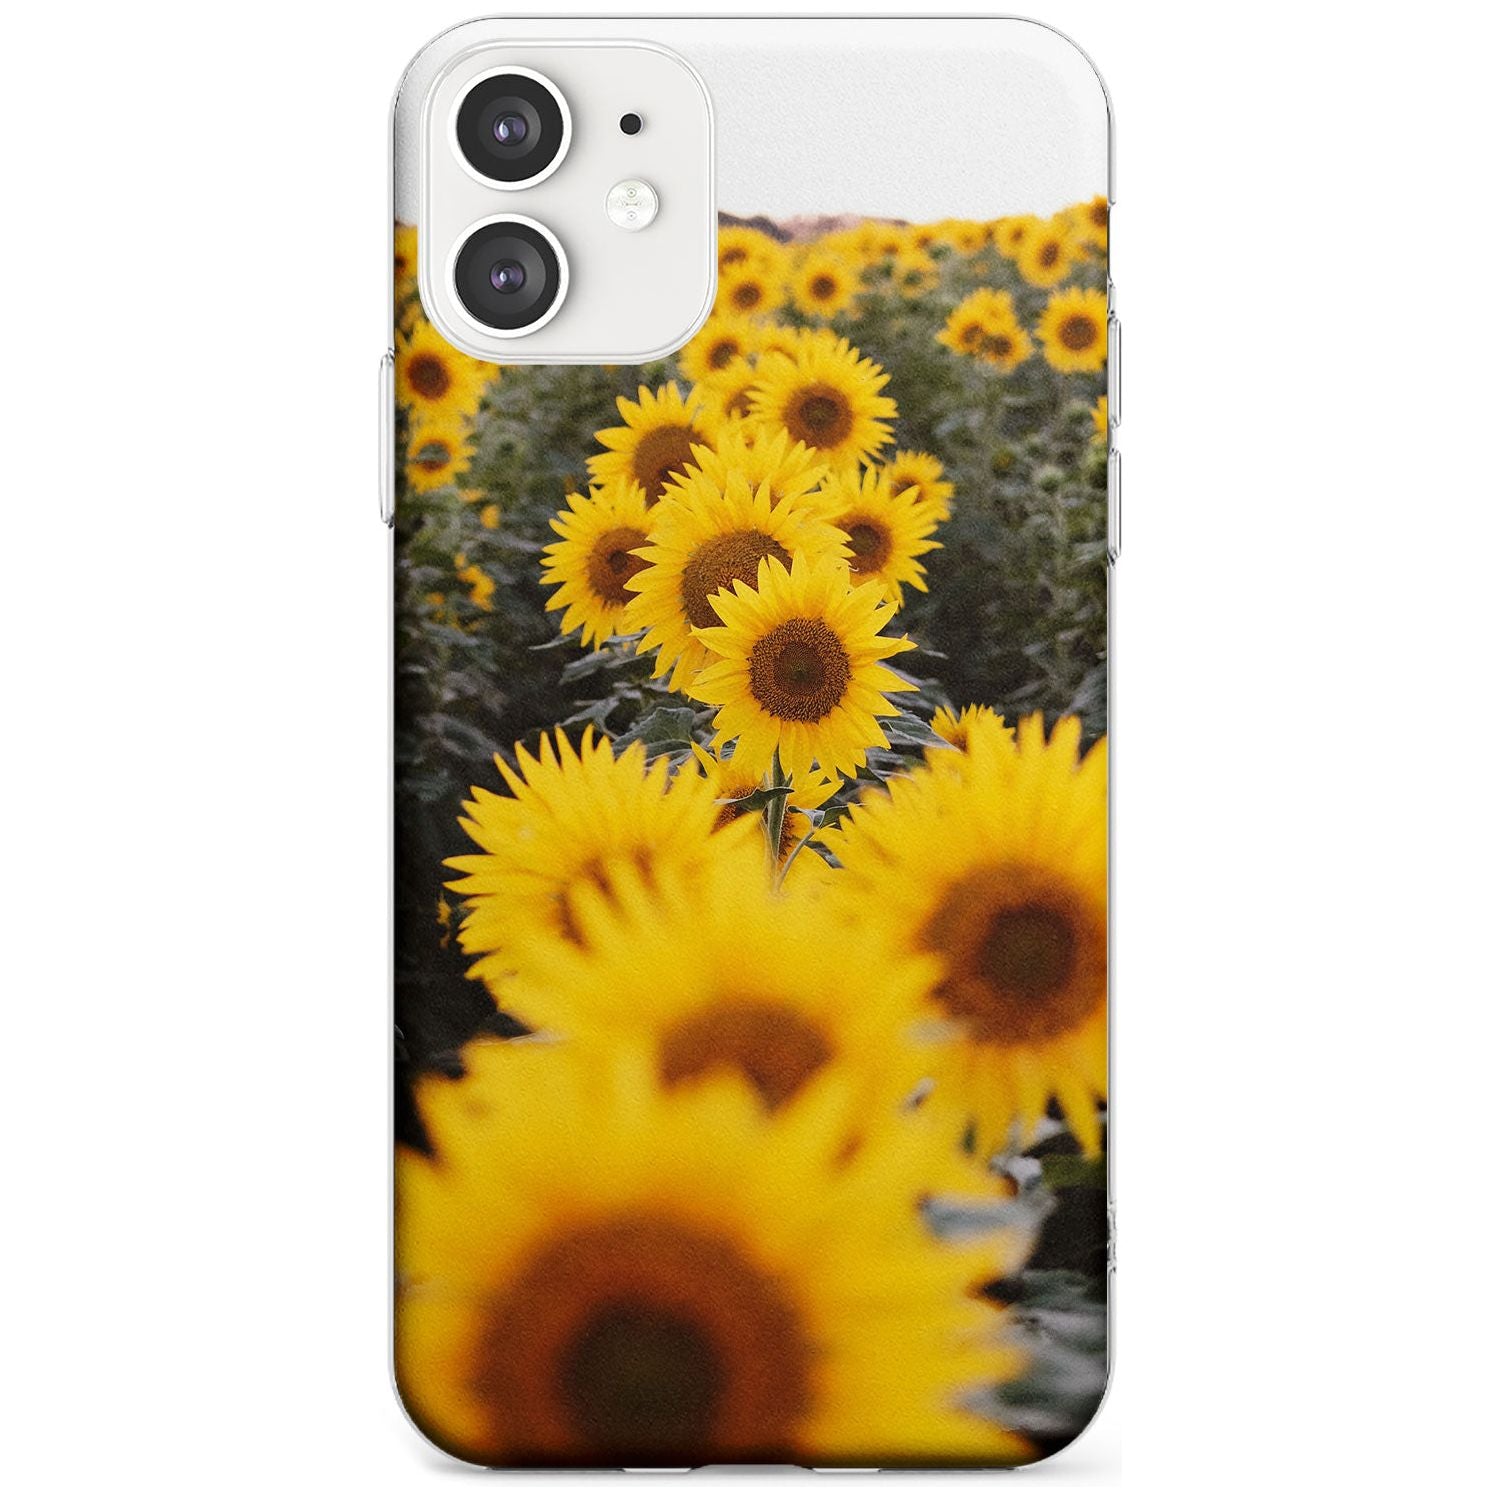 Sunflower Field Photograph Slim TPU Phone Case for iPhone 11